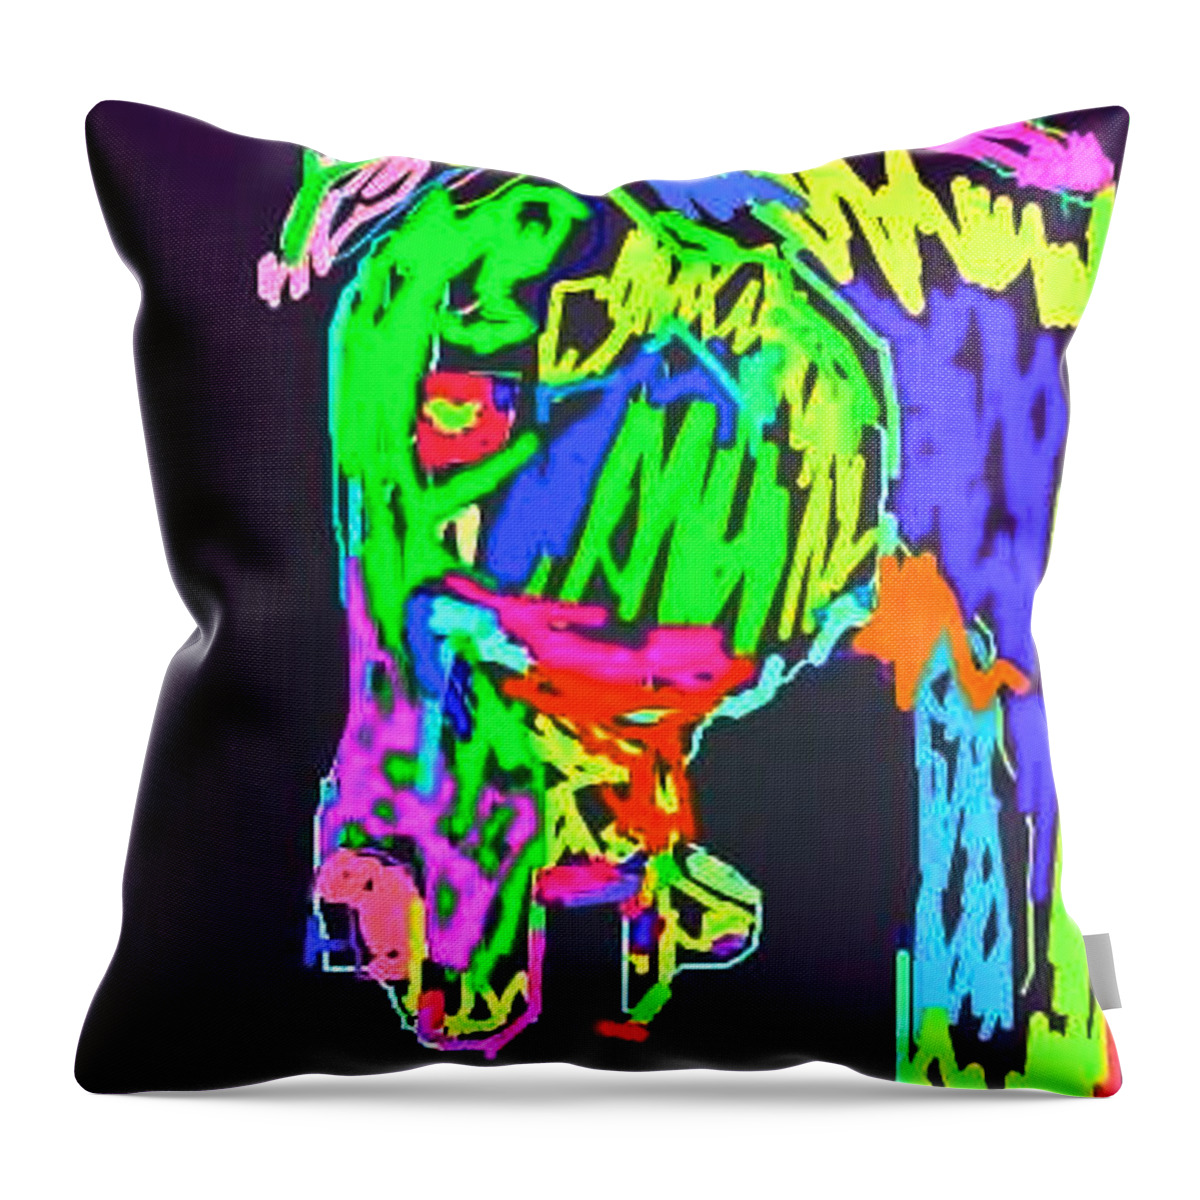 Digital Throw Pillow featuring the digital art Electric Horse by Bern Miller